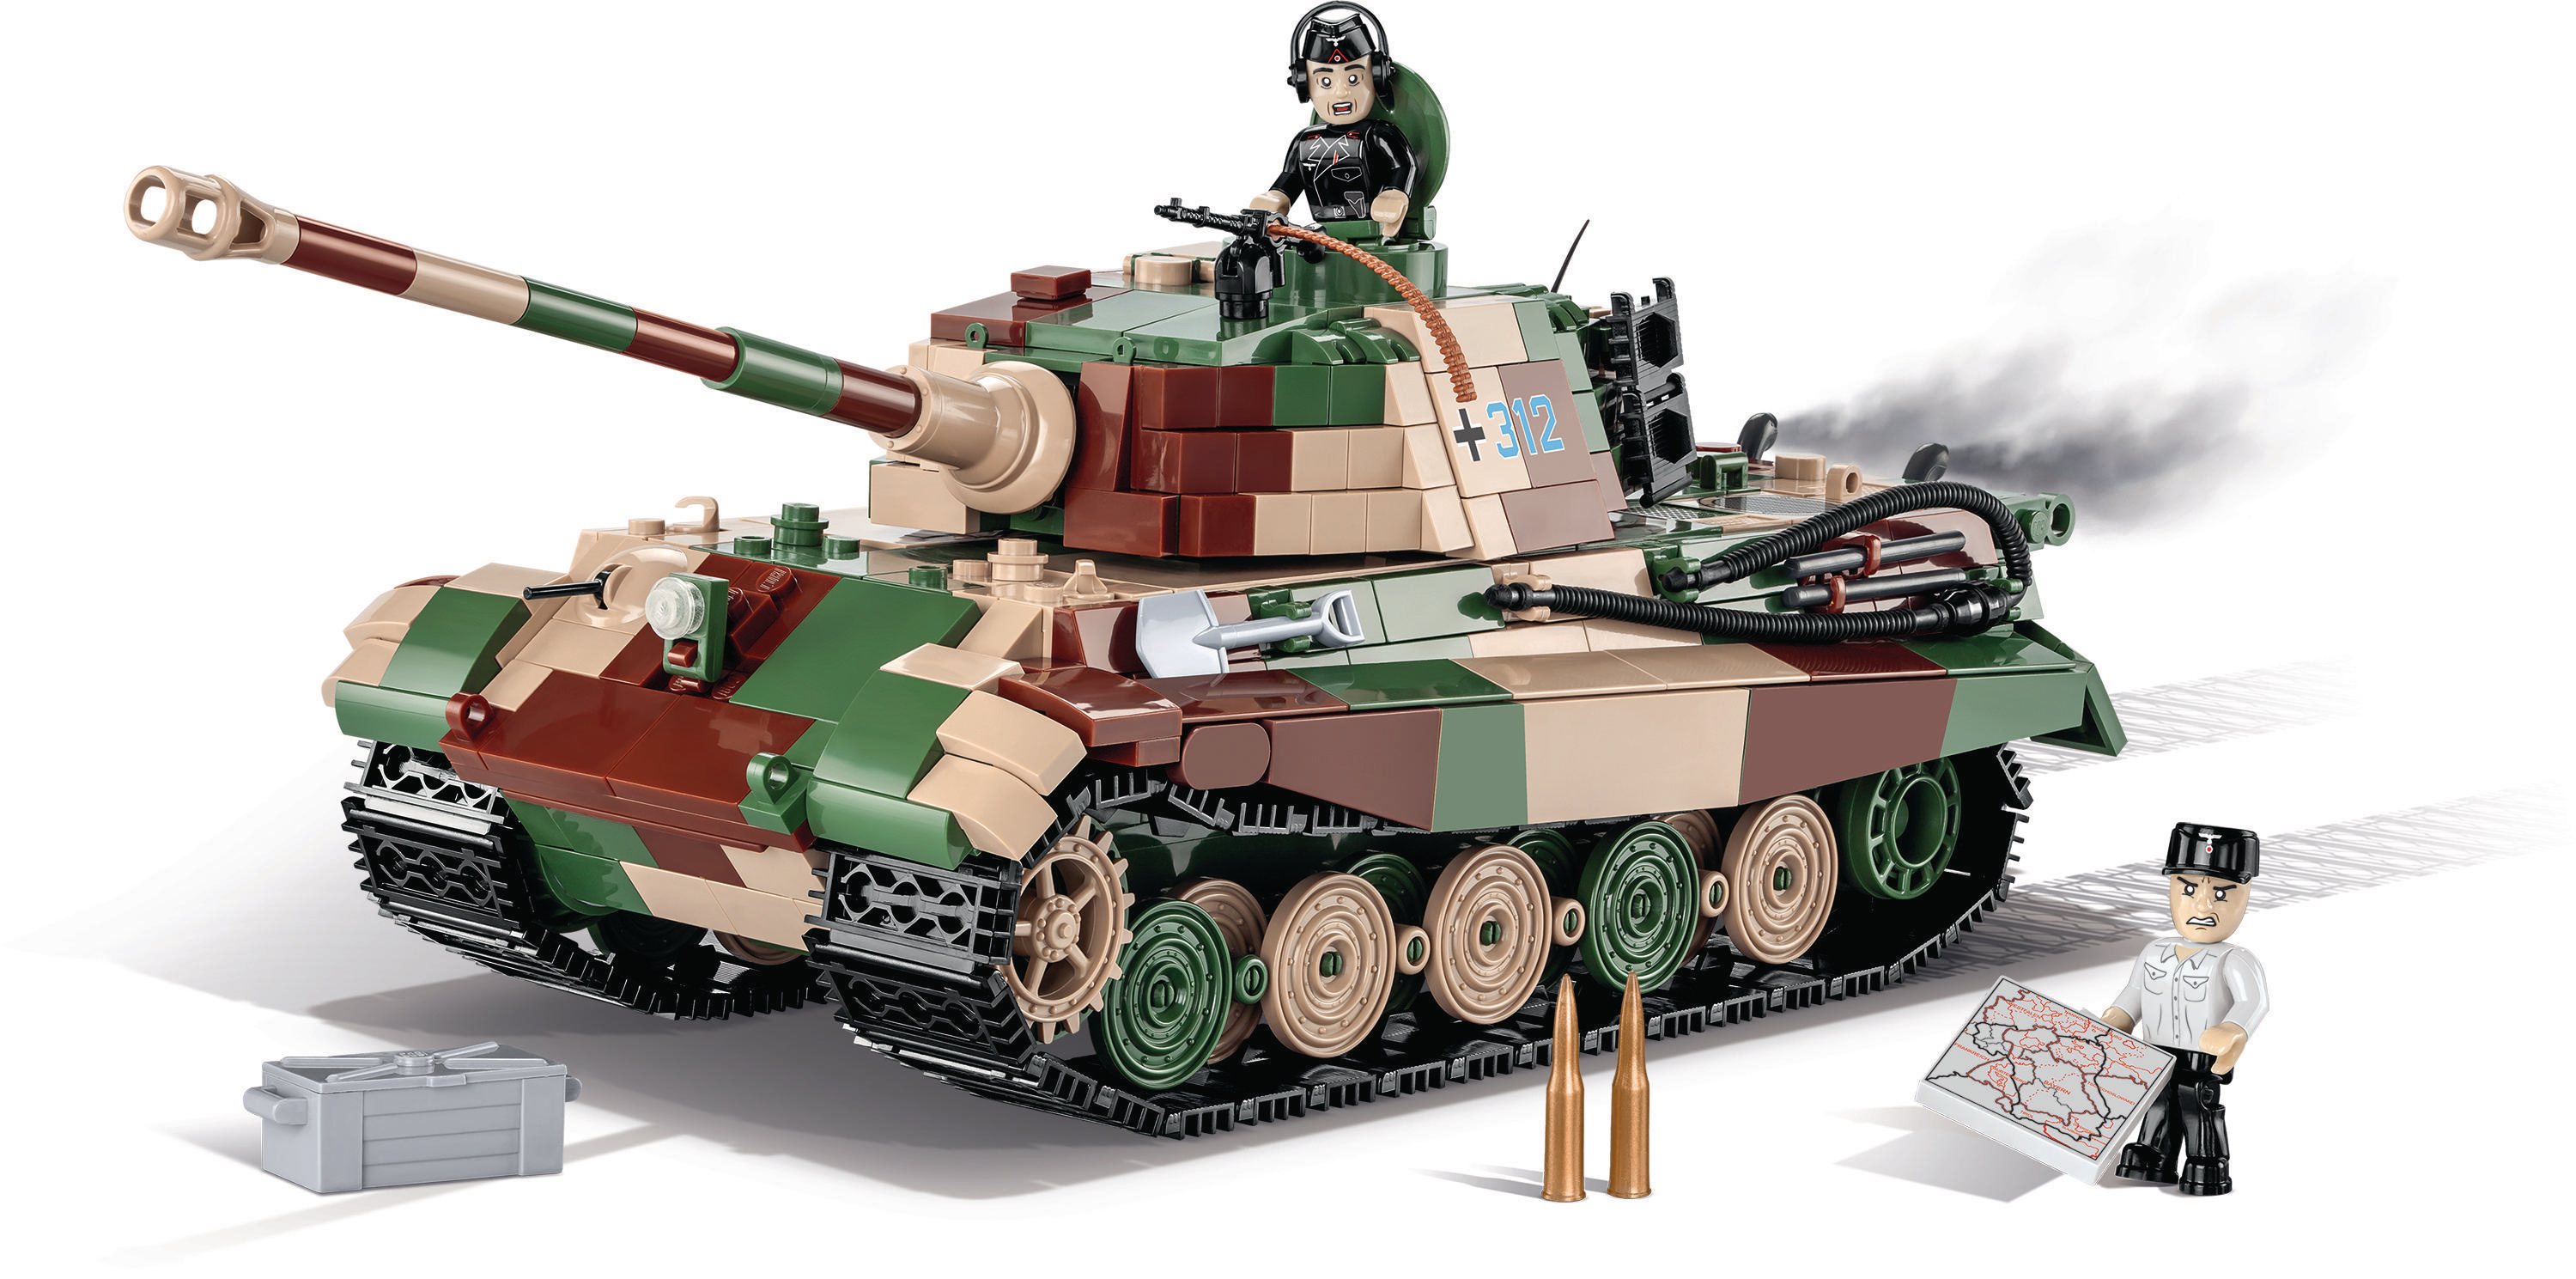 COBI Panzerkampfwagen Tiger B Bausatz, Königstiger Mehrfarbig VI Ausf